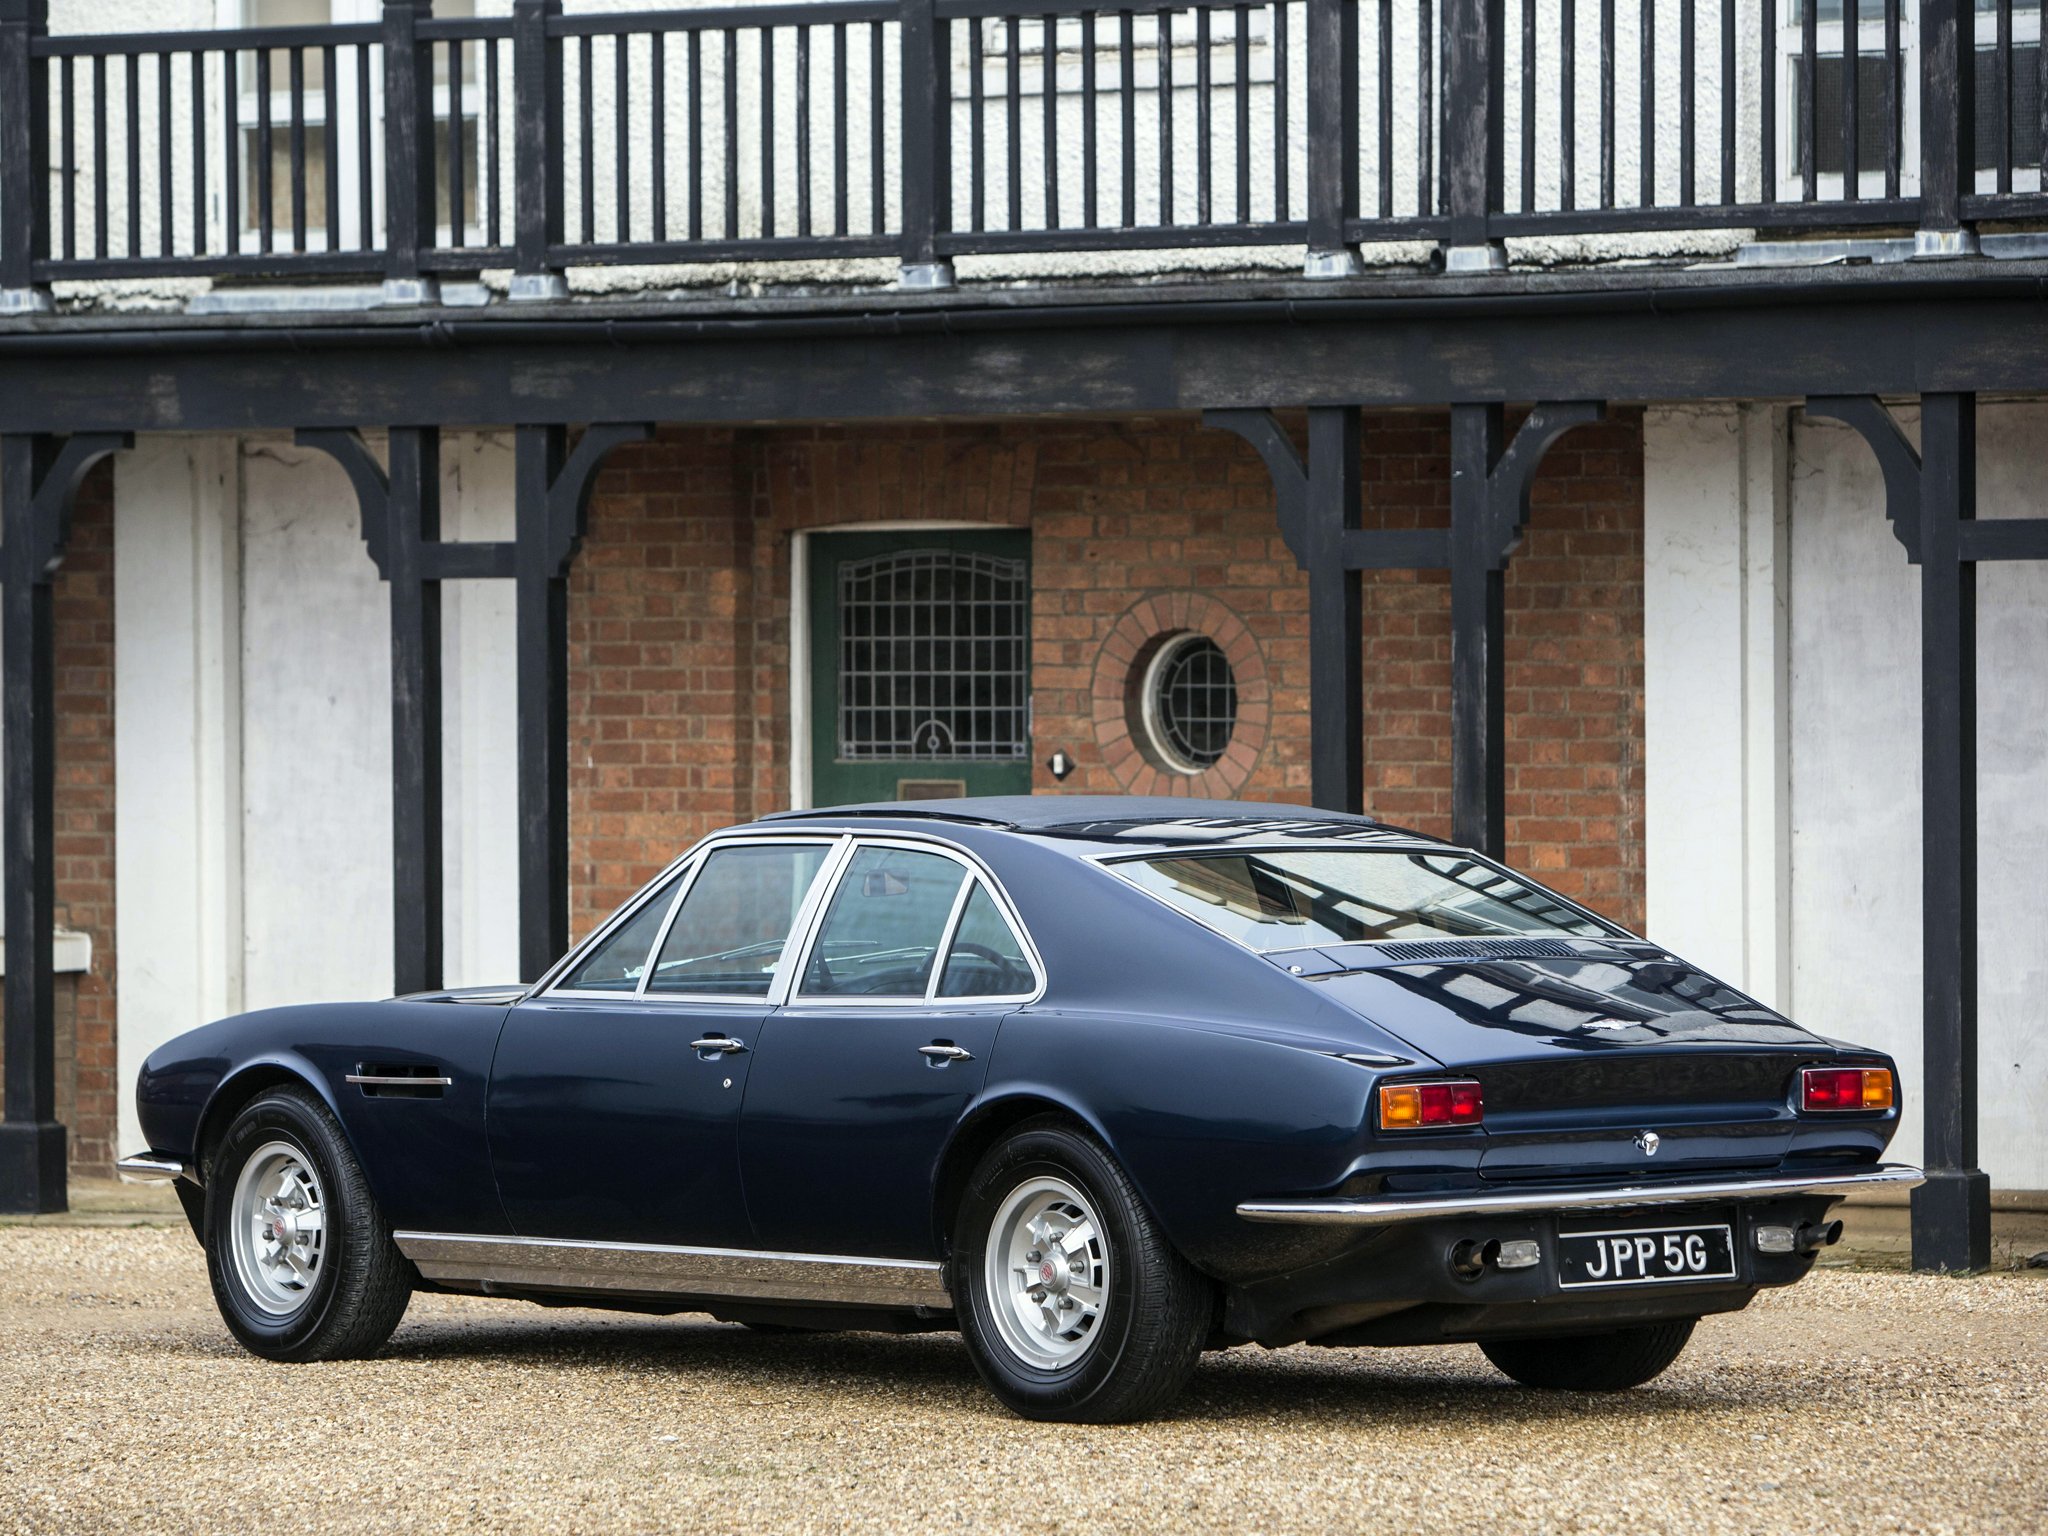 1969, Aston, Martin, Lagonda, V 8, Saloon, Prototype,  mp2301 , Classic, Rw Wallpaper